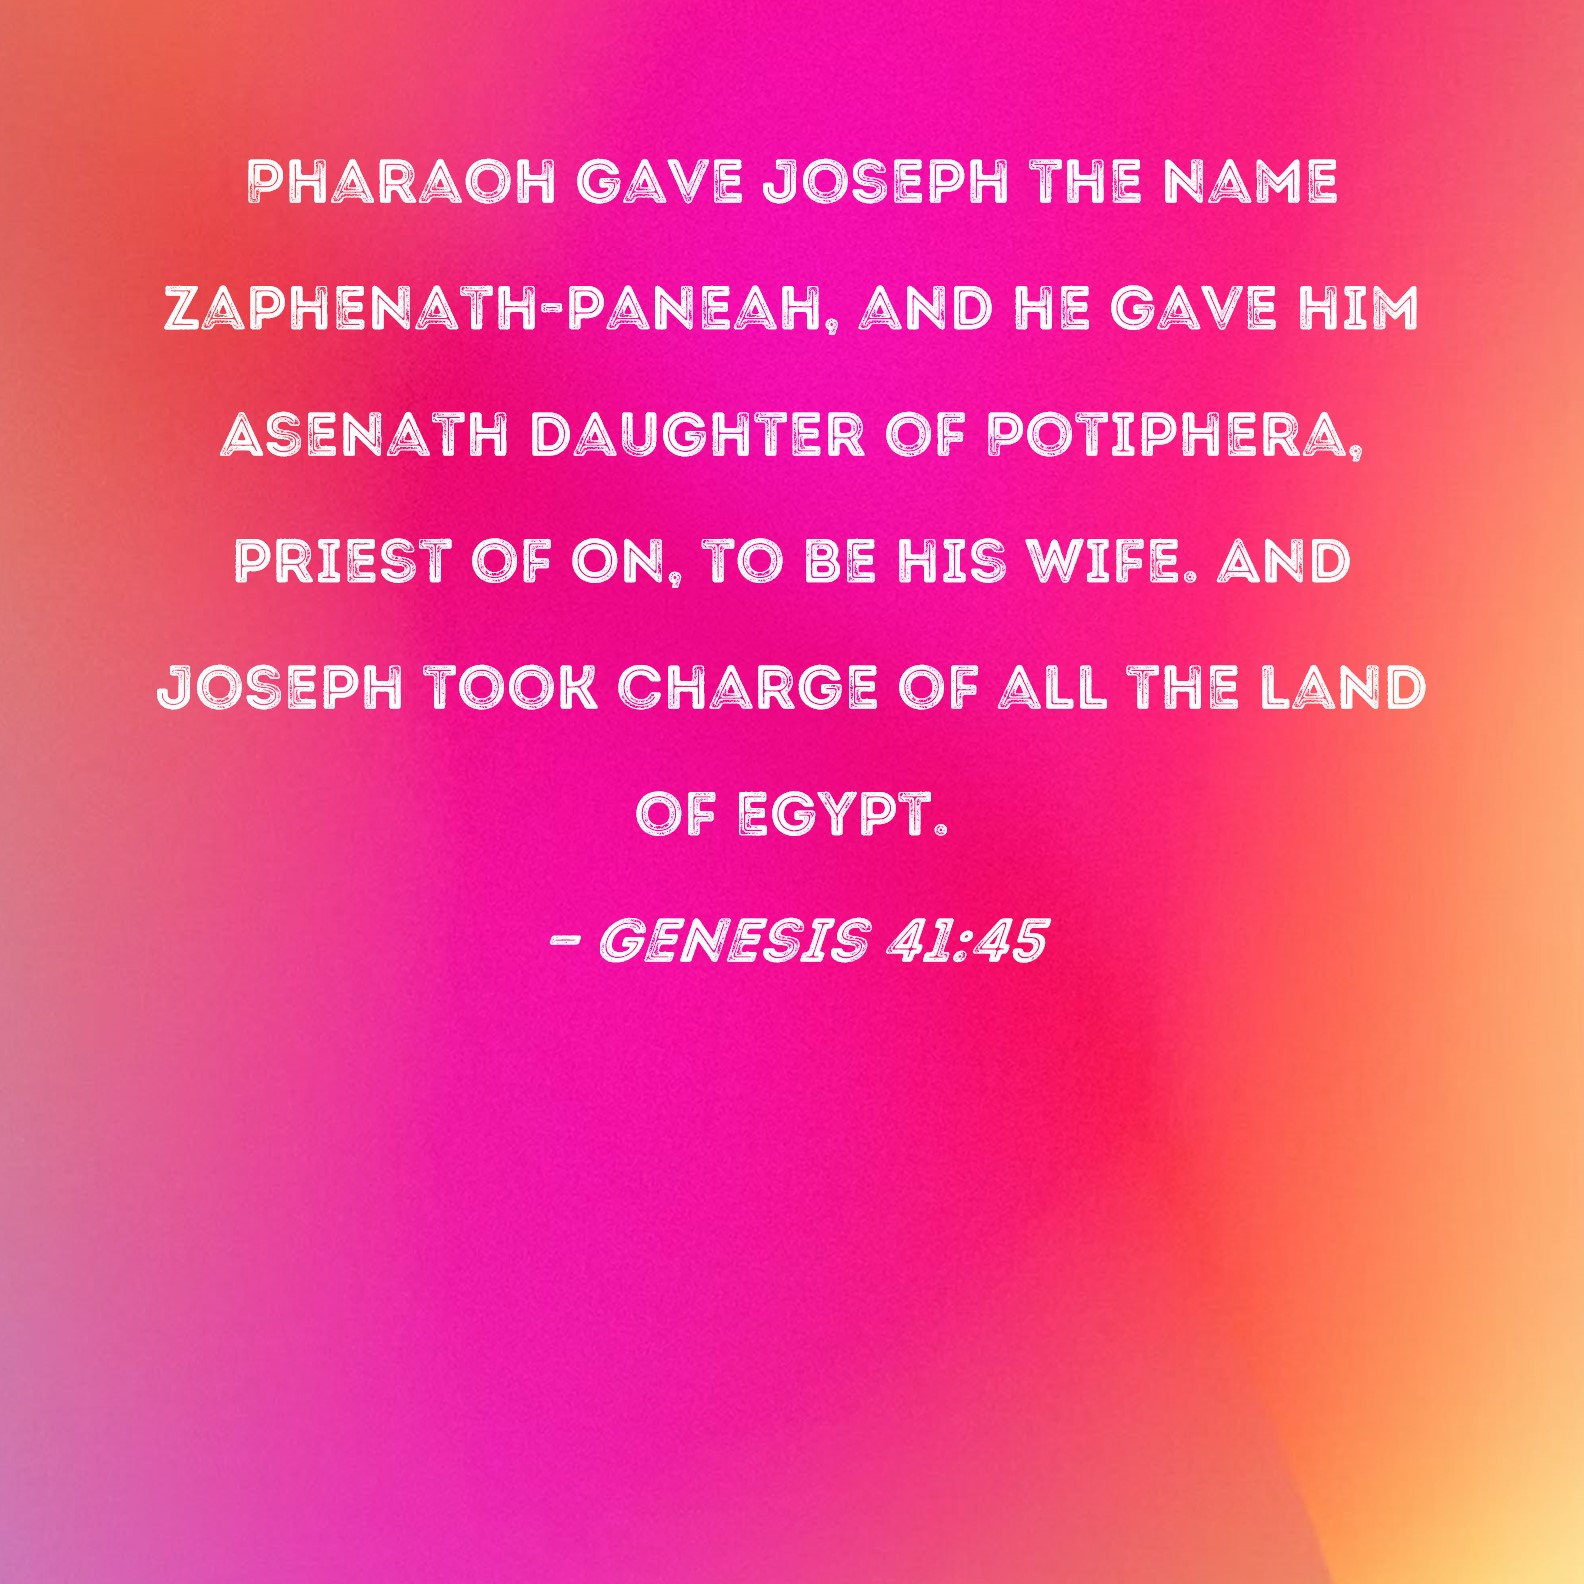 genesis-41-45-pharaoh-gave-joseph-the-name-zaphenath-paneah-and-he